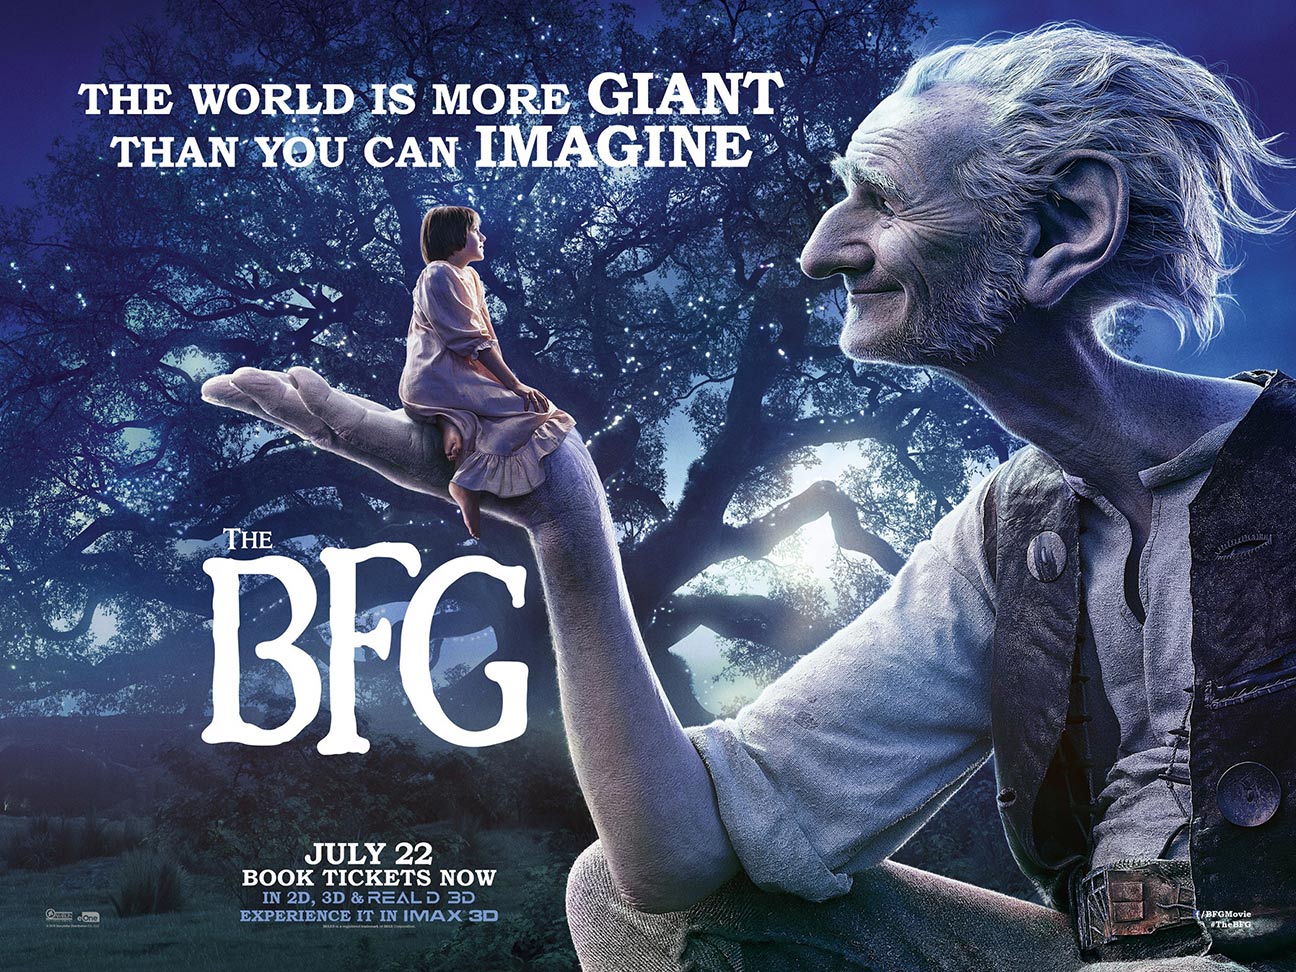 BFG (2016) Movie Poster Google image from https://cdn.traileraddict.com/content/walt-disney-pictures/the-bfg-4.jpg